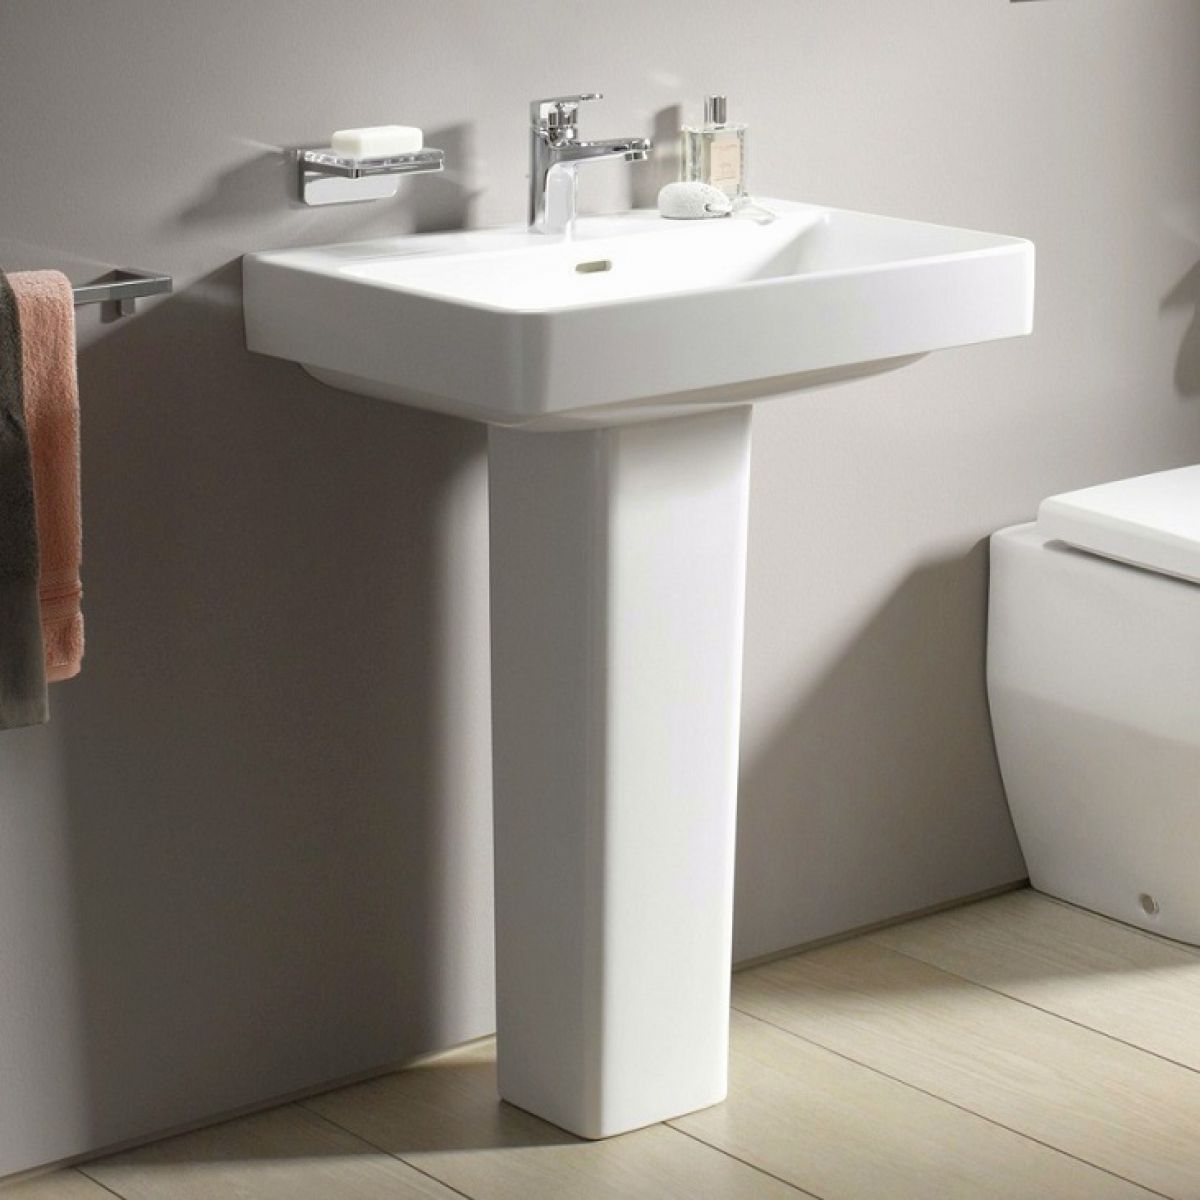 image example of a pedestal bathroom sink